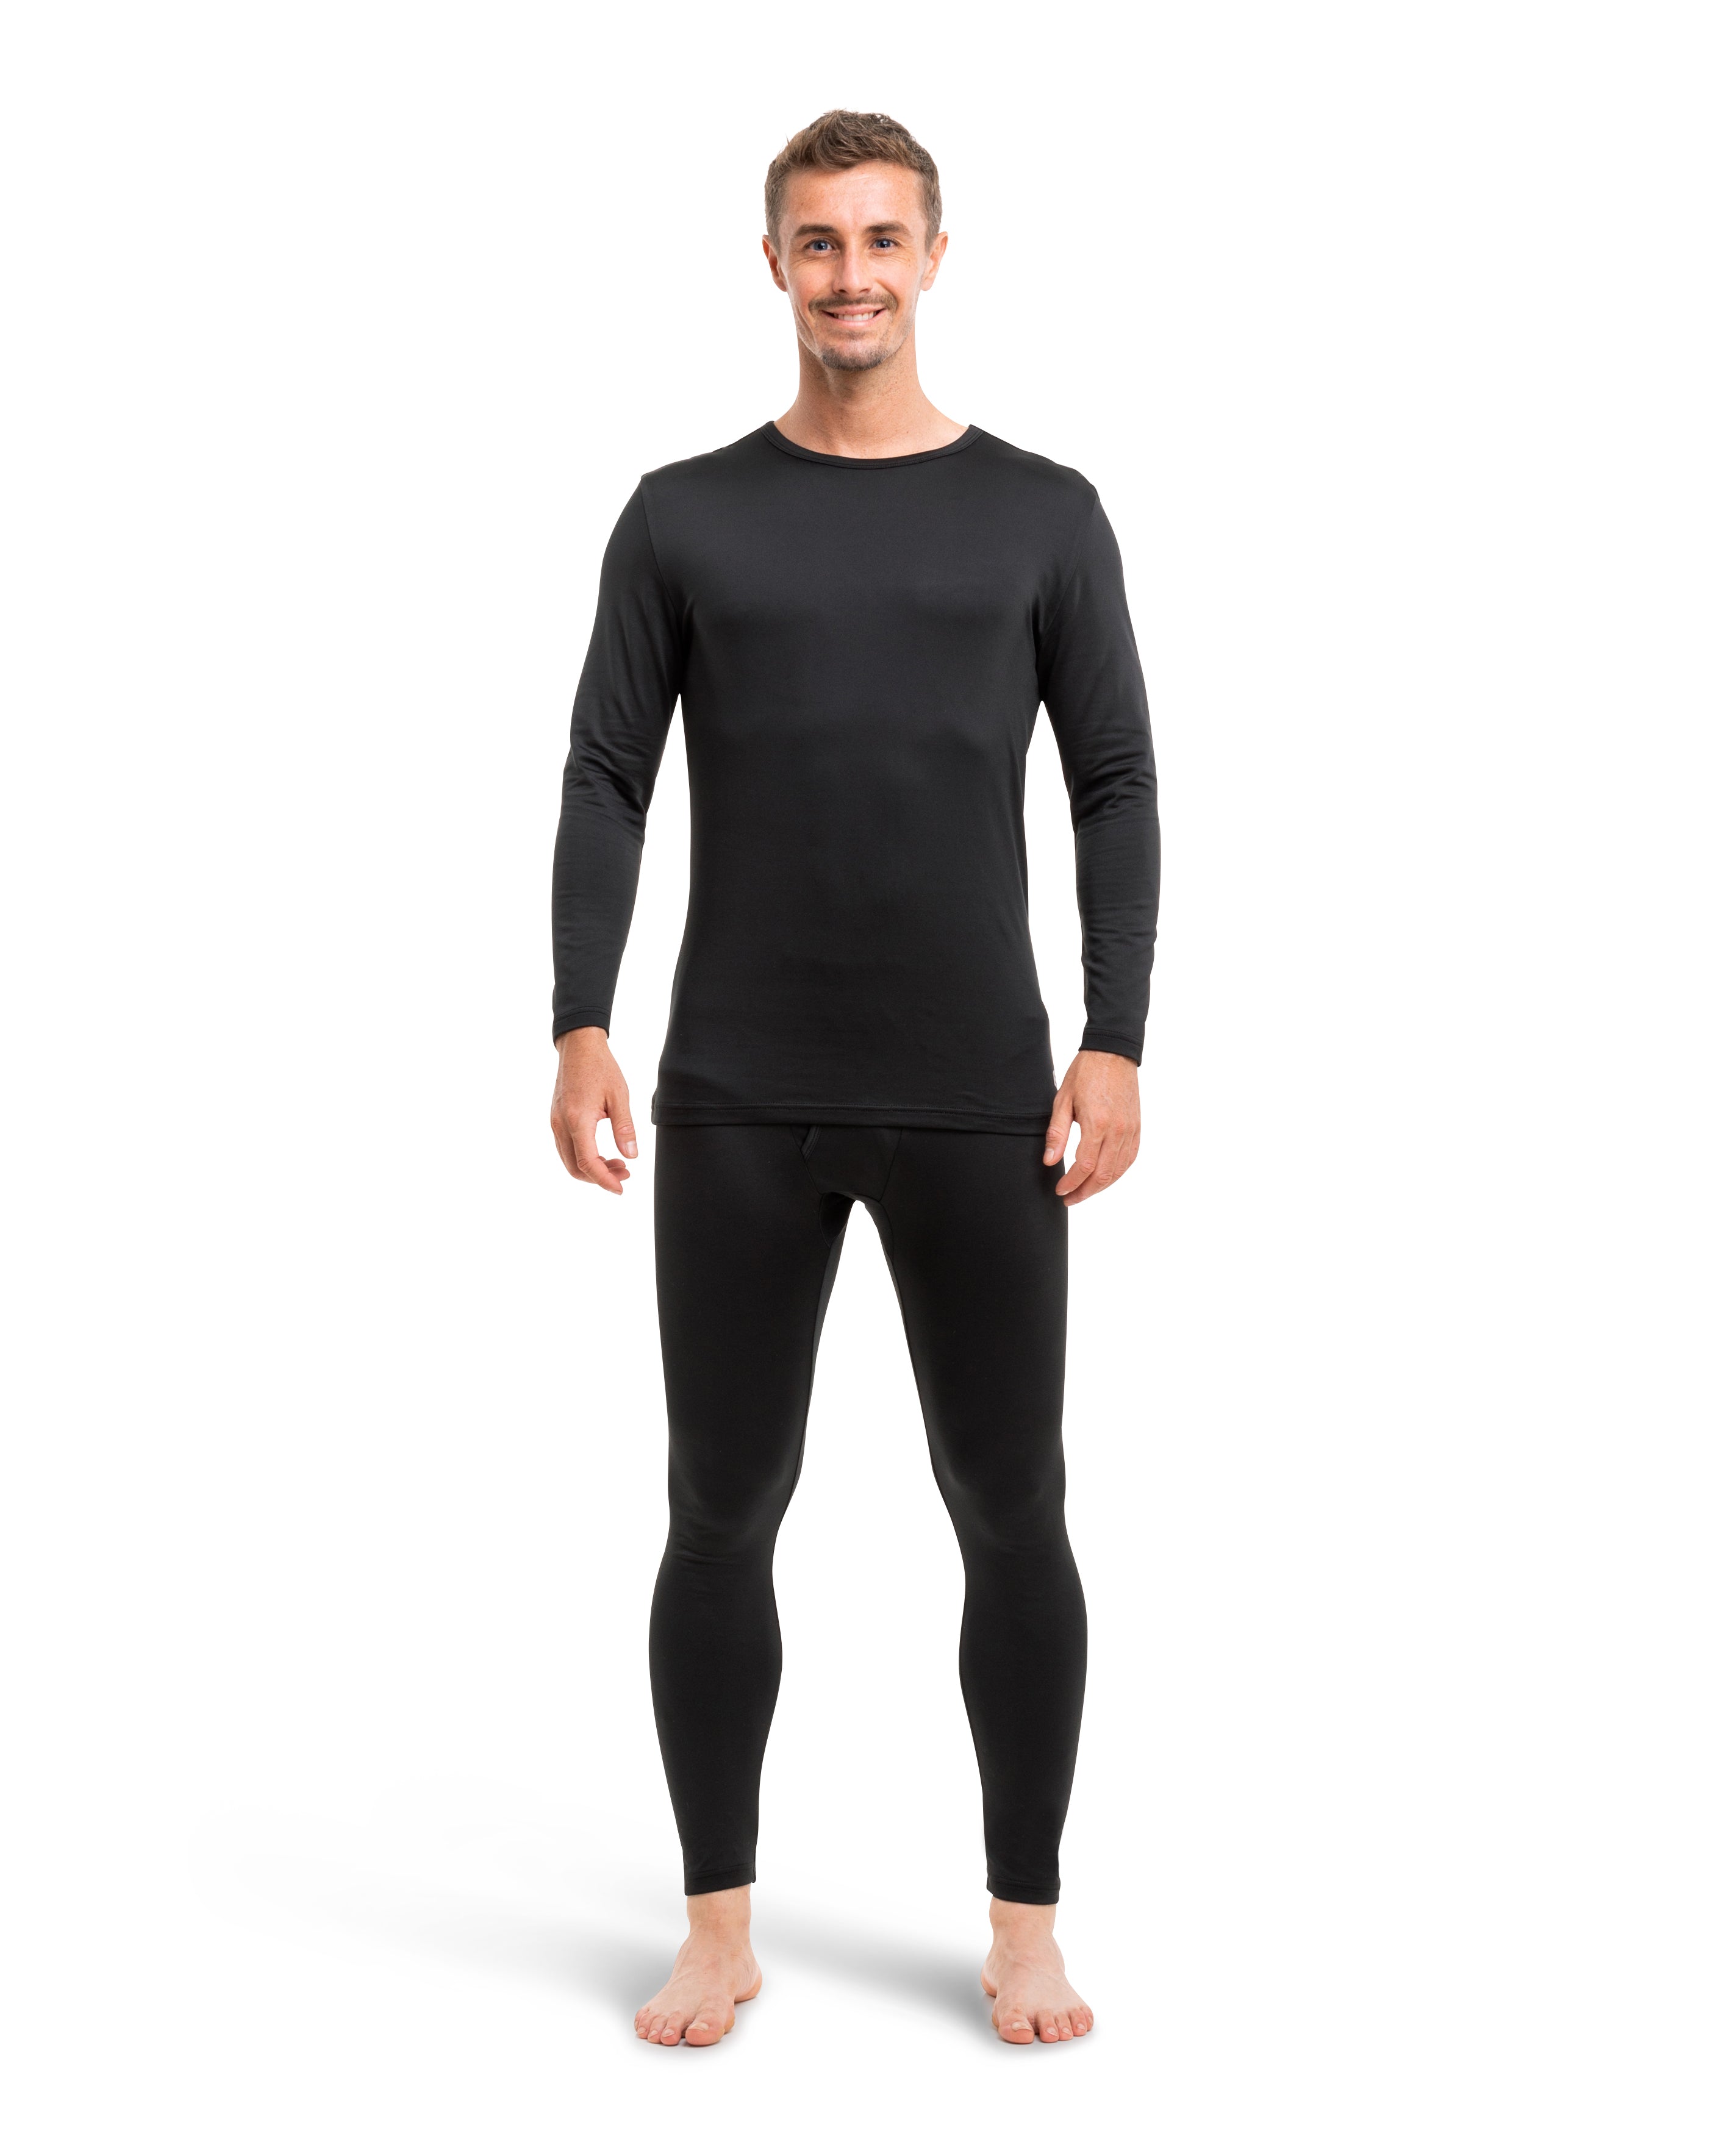 Mens Ultra-Soft Thermal Underwear 2 Piece Long Johns for Men with Fleece Lining - BROOKLYN + JAX